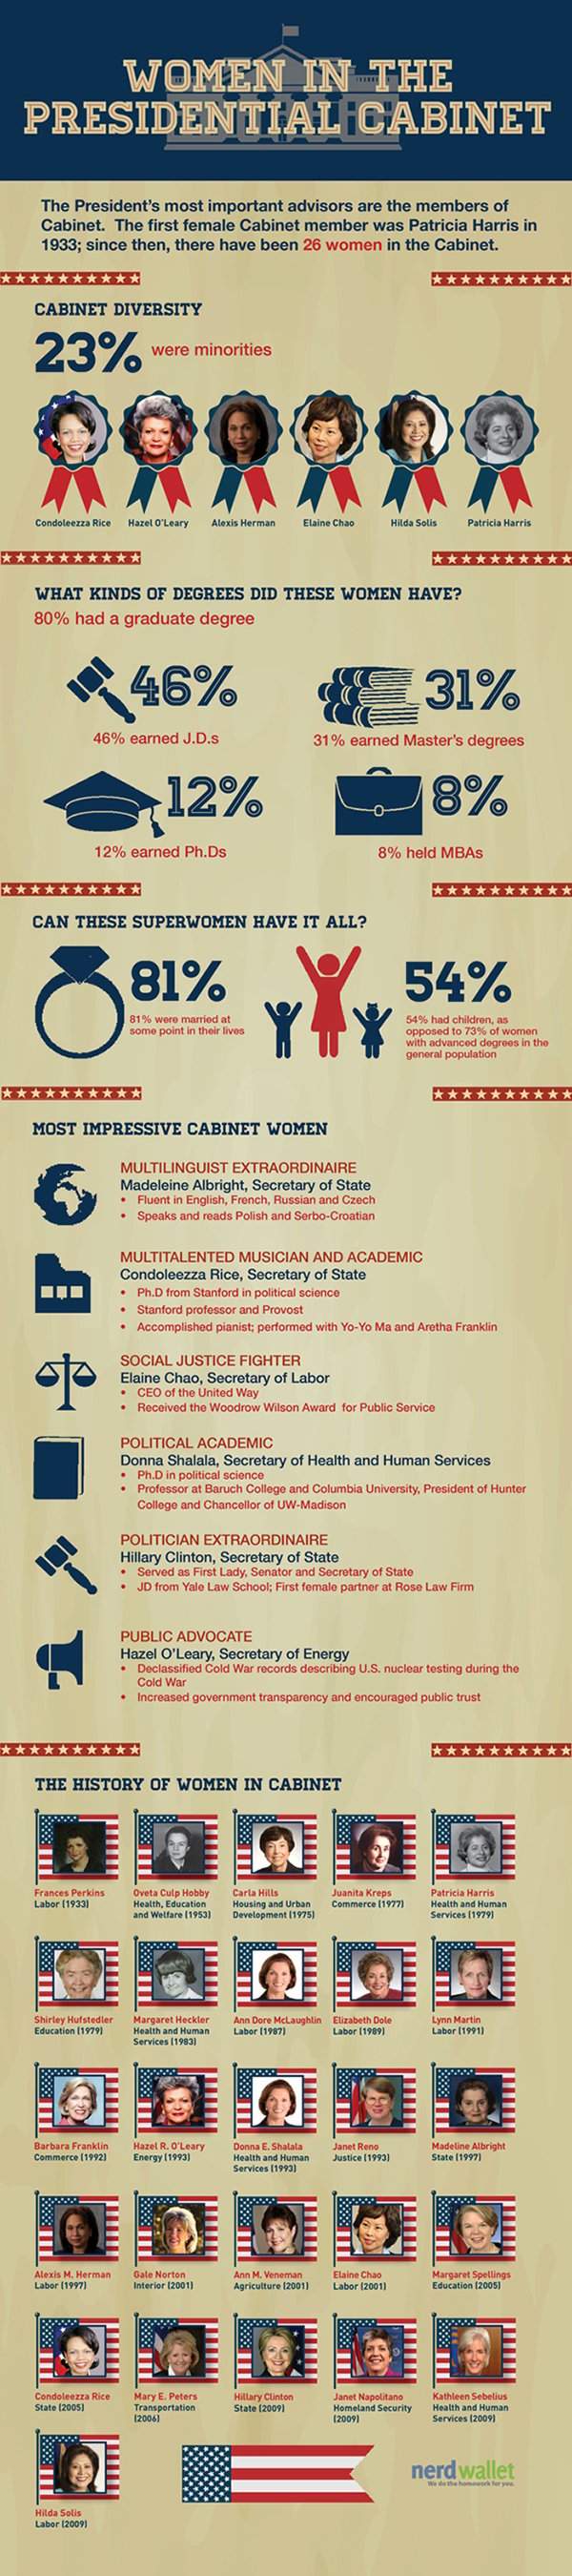 Women in the Presidential Cabinet